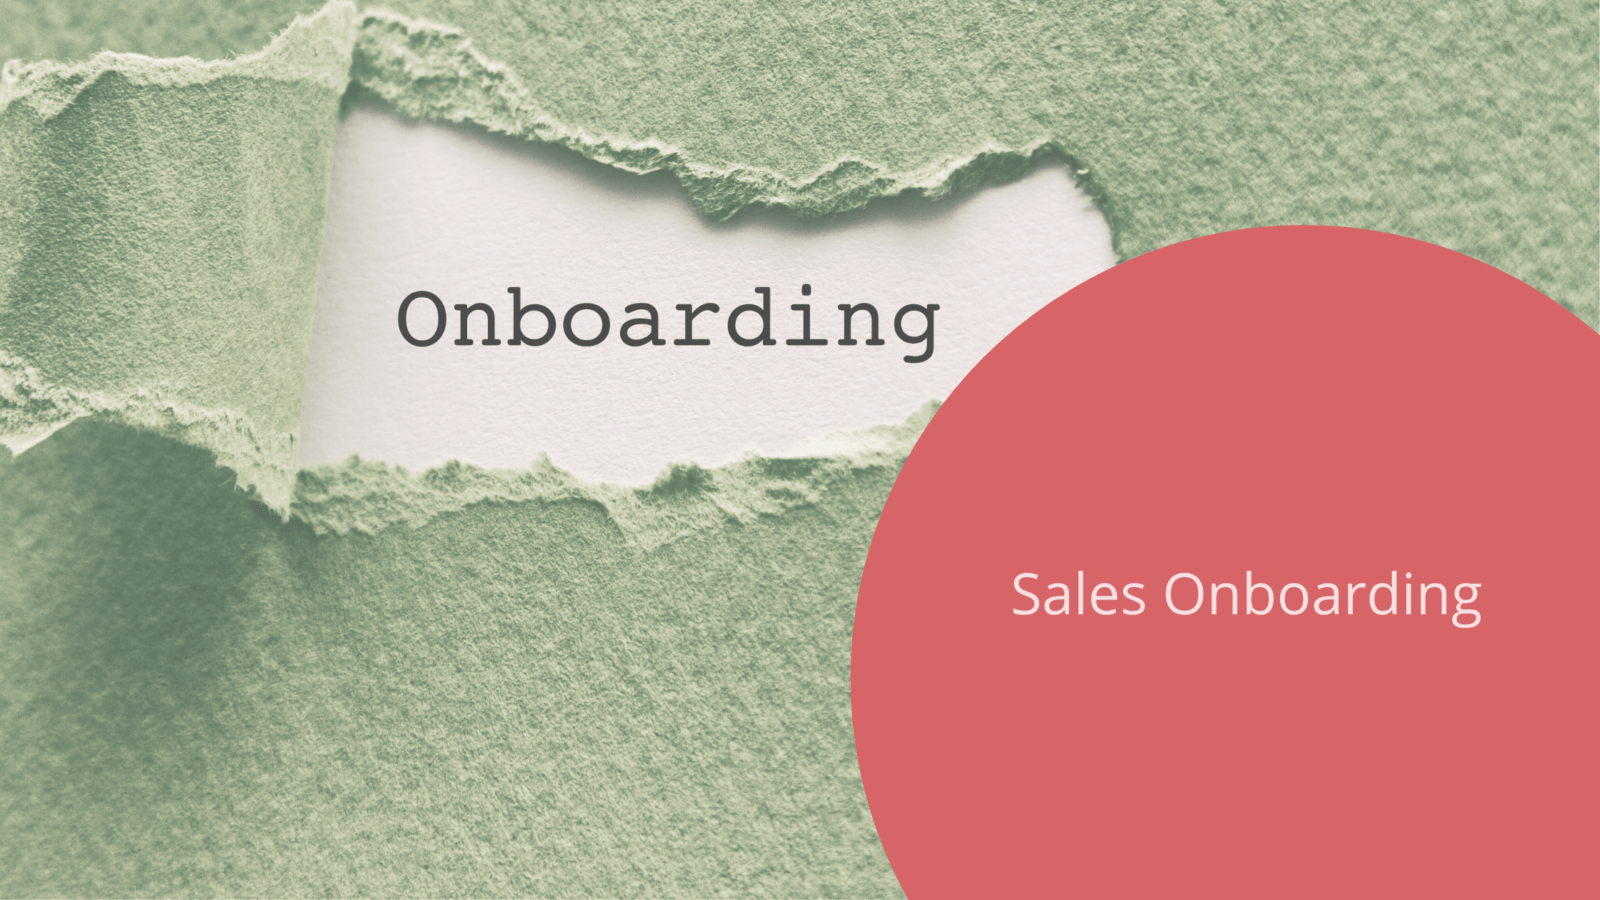 Sales onboarding